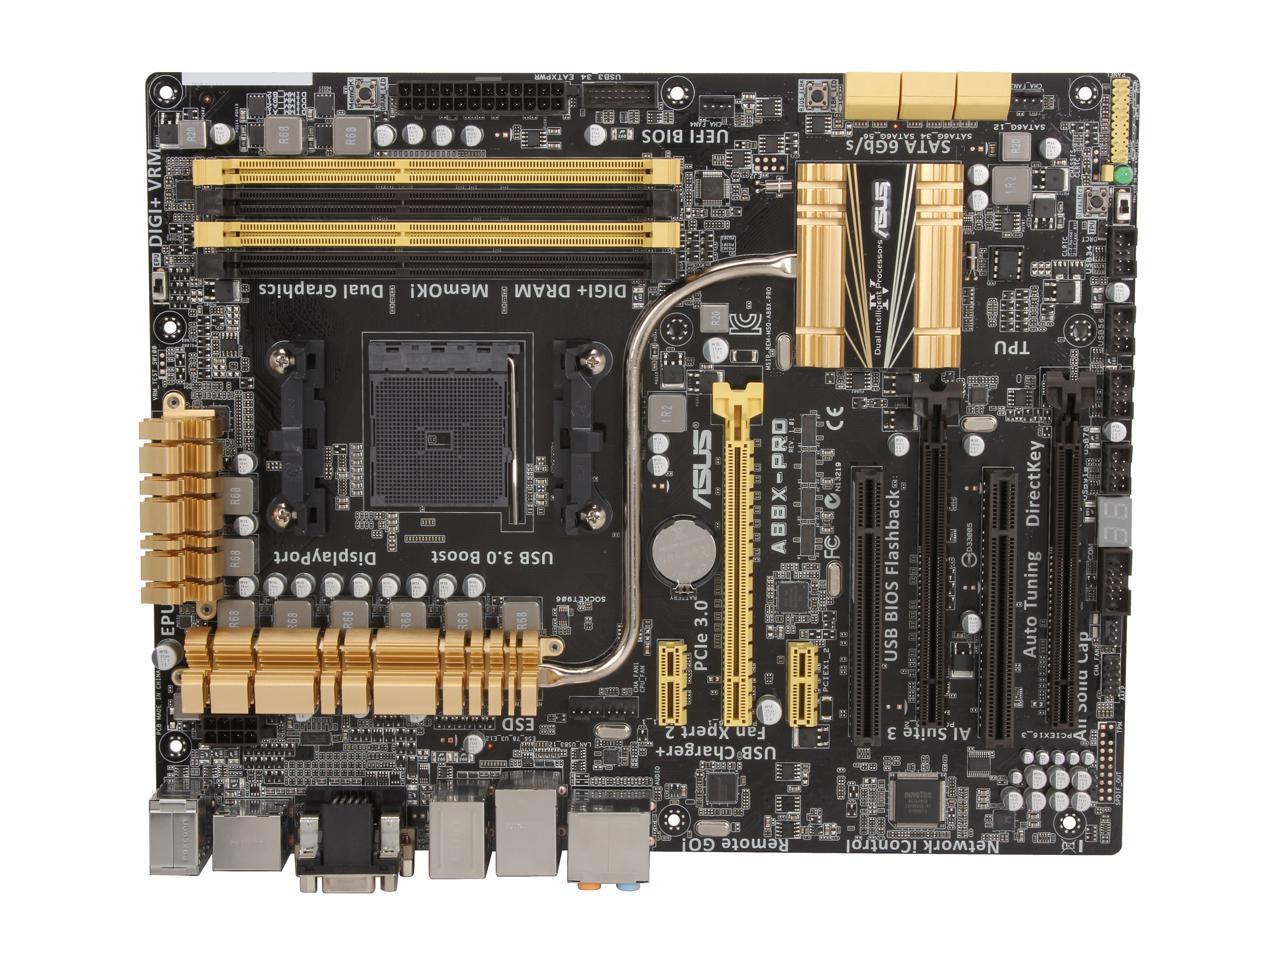 ASUS A88X-PRO FM2+ / FM2 AMD A88X (Bolton D4) SATA 6Gb/s USB 3.0 HDMI ATX AMD Motherboard